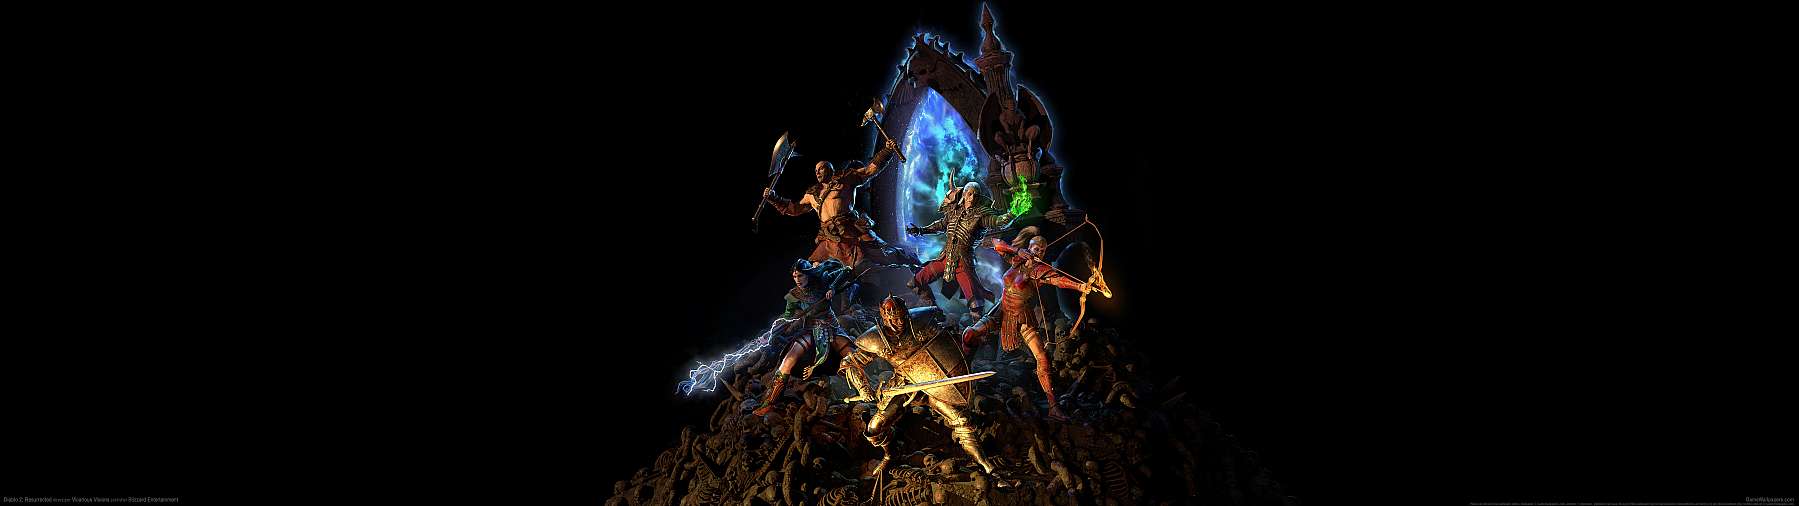 Diablo 2: Resurrected superwide wallpaper or background 07